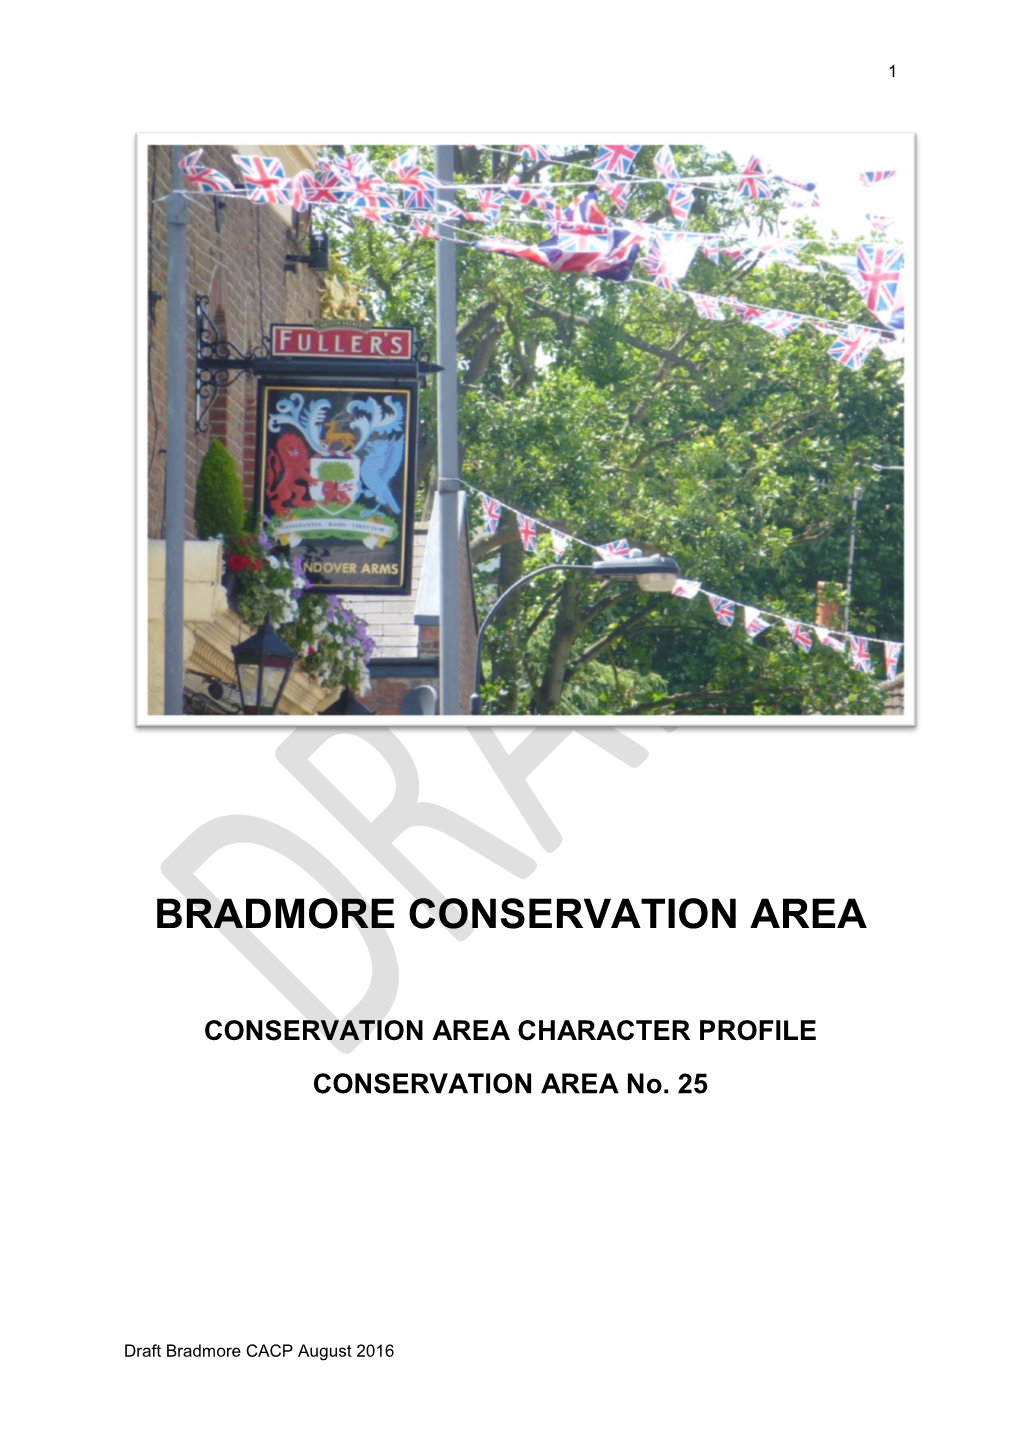 Bradmore Conservation Area